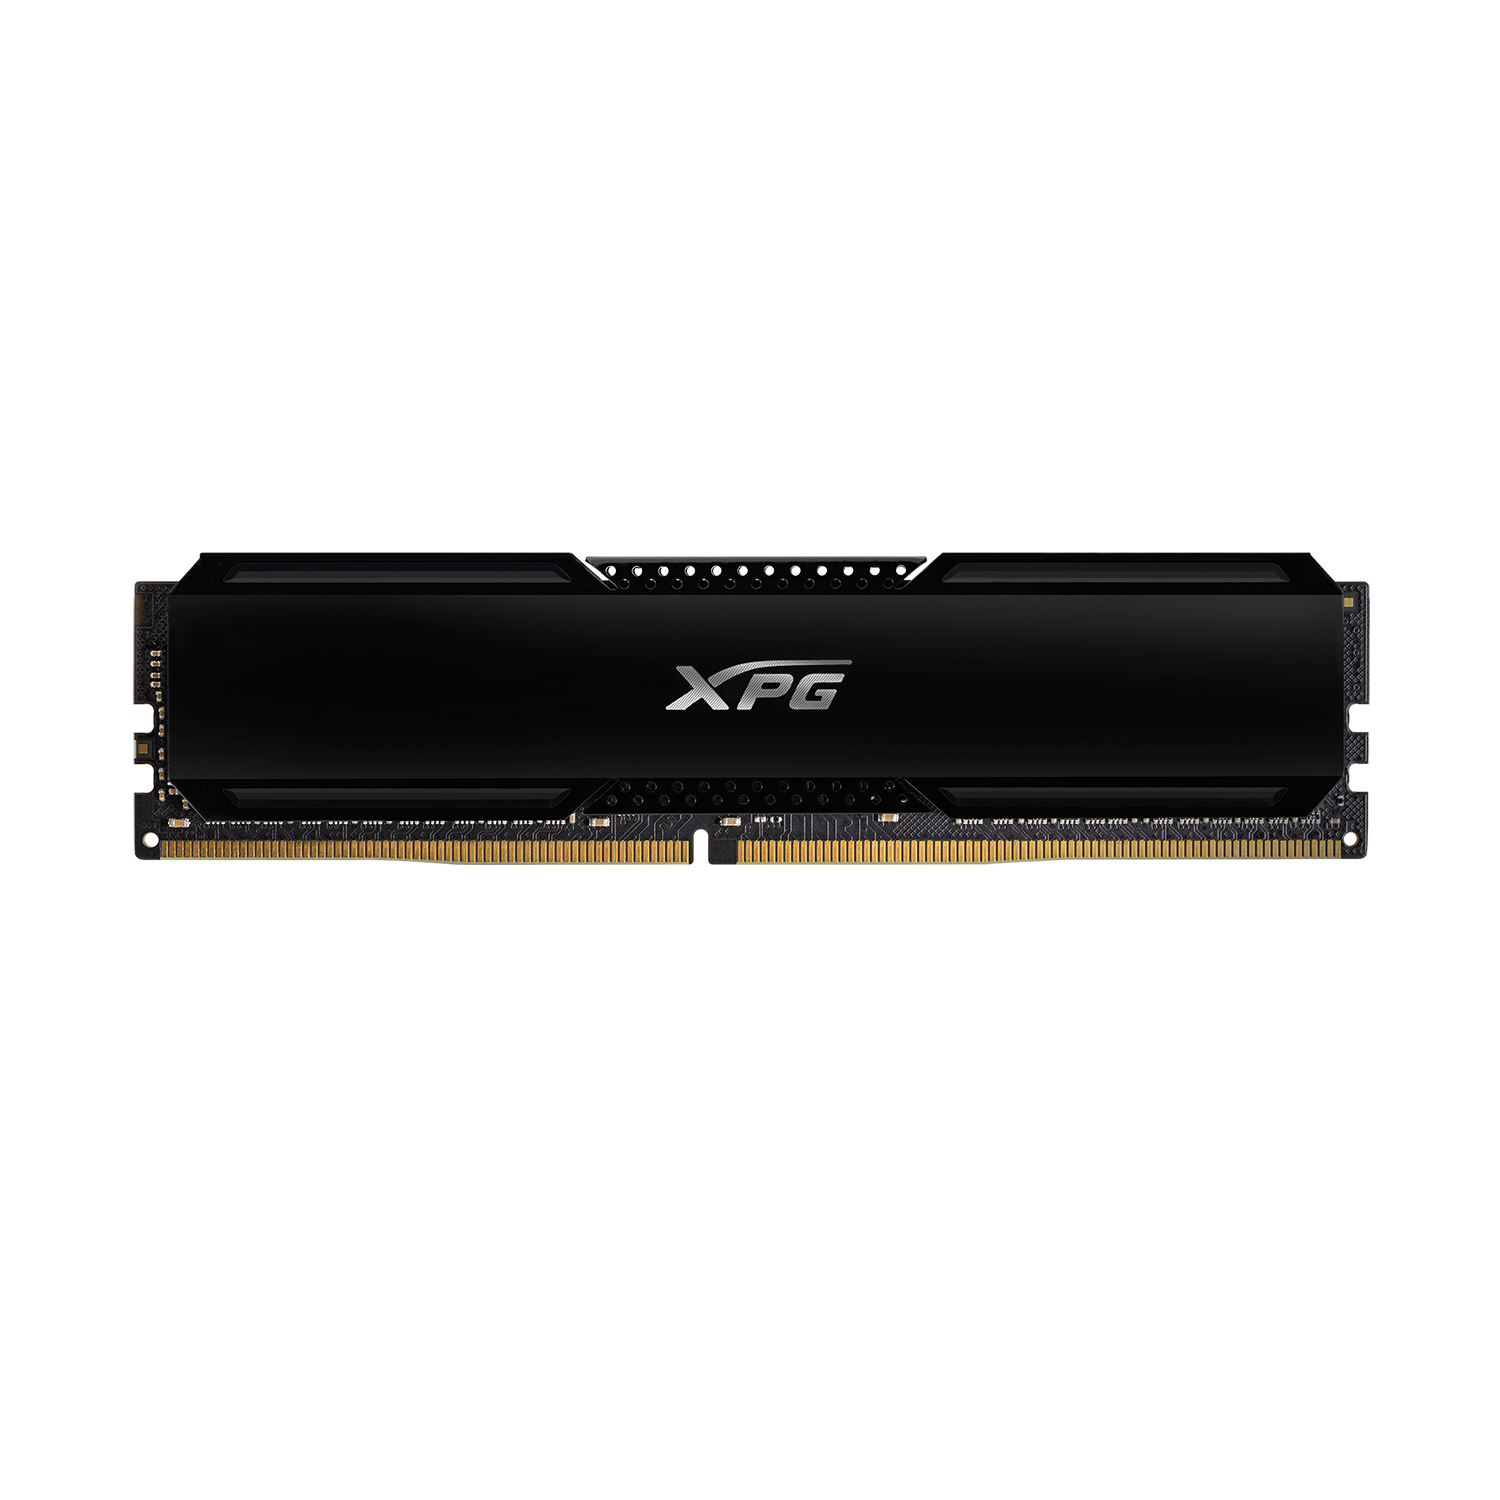 ADATA XPG GAMMIX D20 3600MHZ 8GB DDR4 RAM GREY - AX4U36008G18A-CTG20